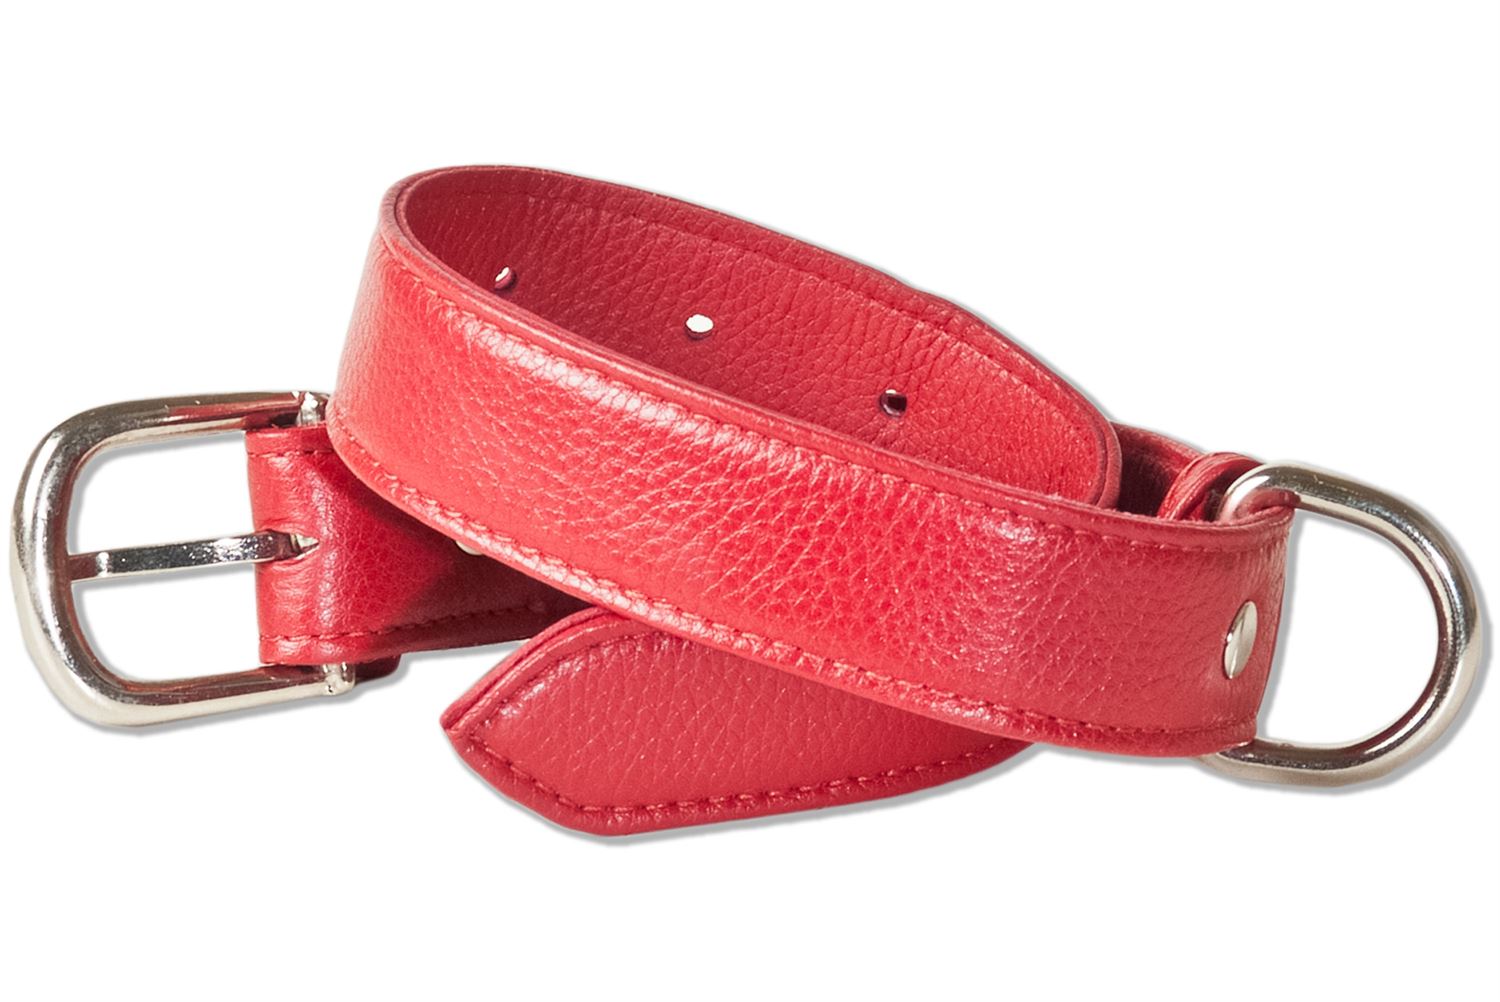 Rimbaldi® Voll-Leder Hundehalsband für mittelgroße Hunde mit 35-45 cm Halsumfang in Rot